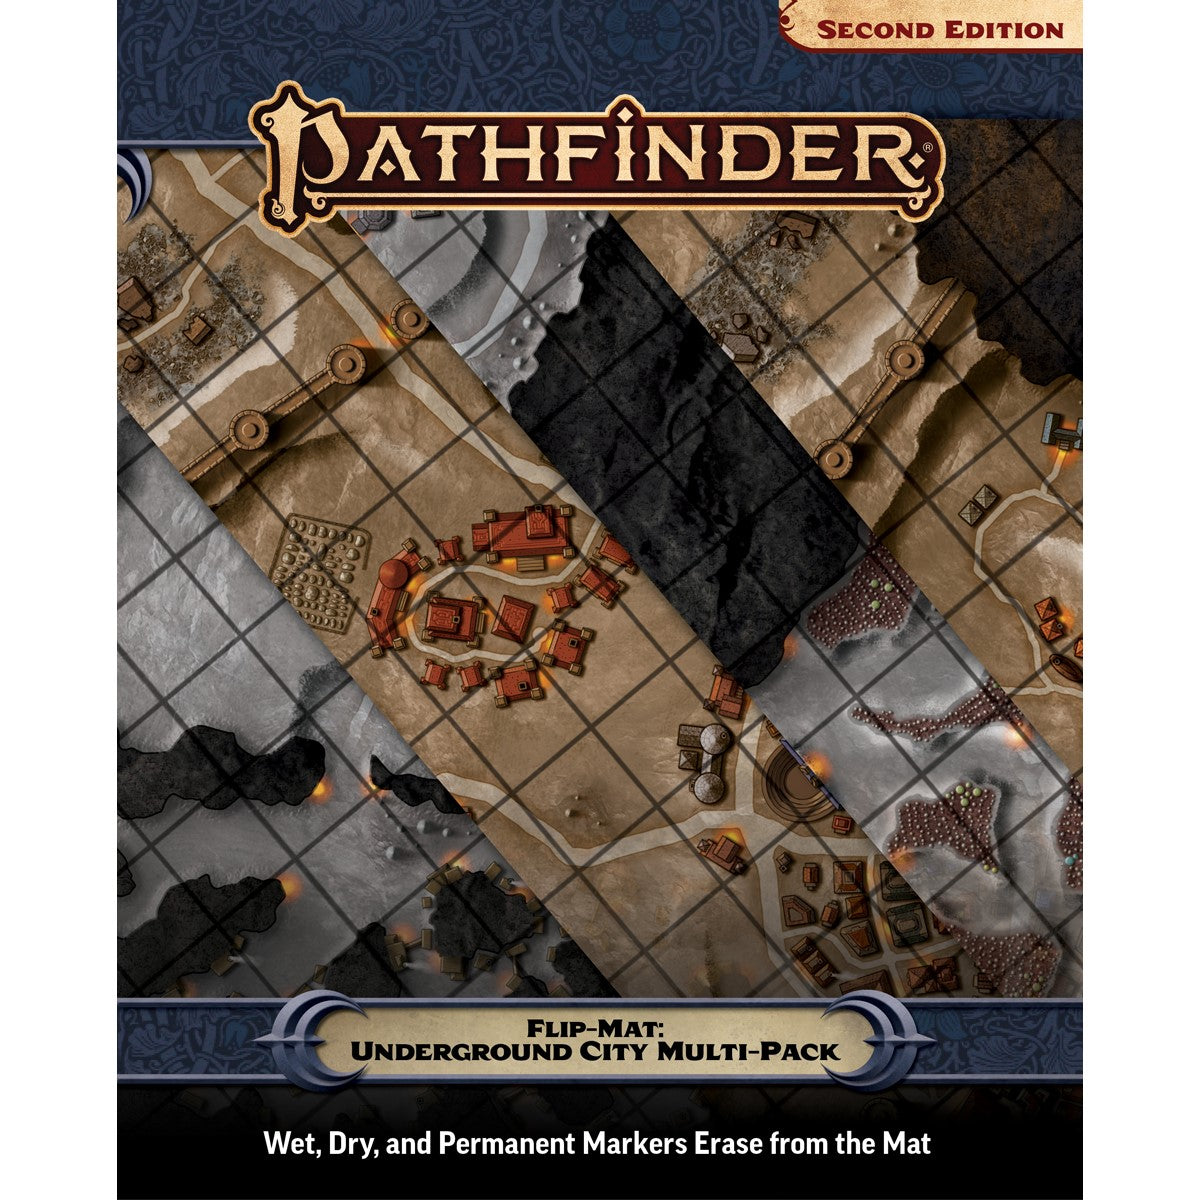 Pathfinder Second Edition Flip-Mat: Underground City Multi-Pack